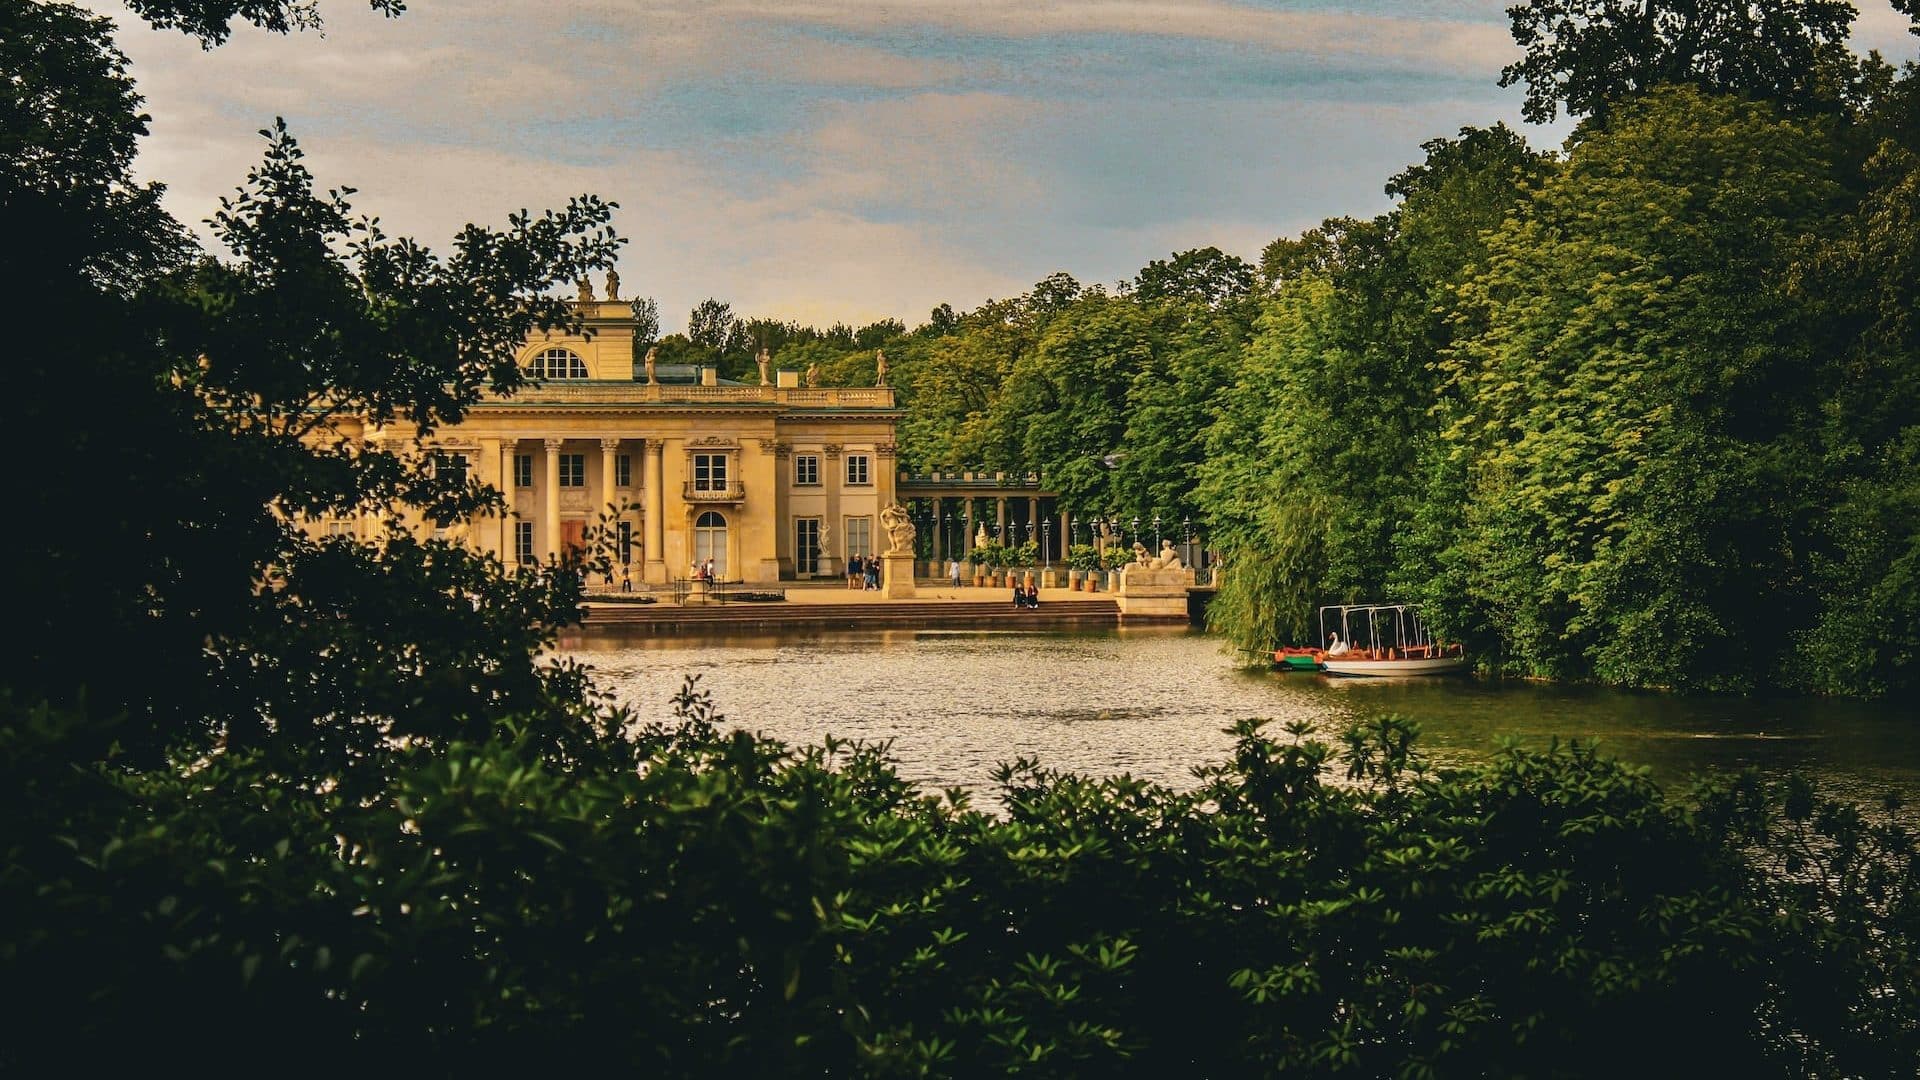 Łazienki Park is Warsaw's loveliest green space